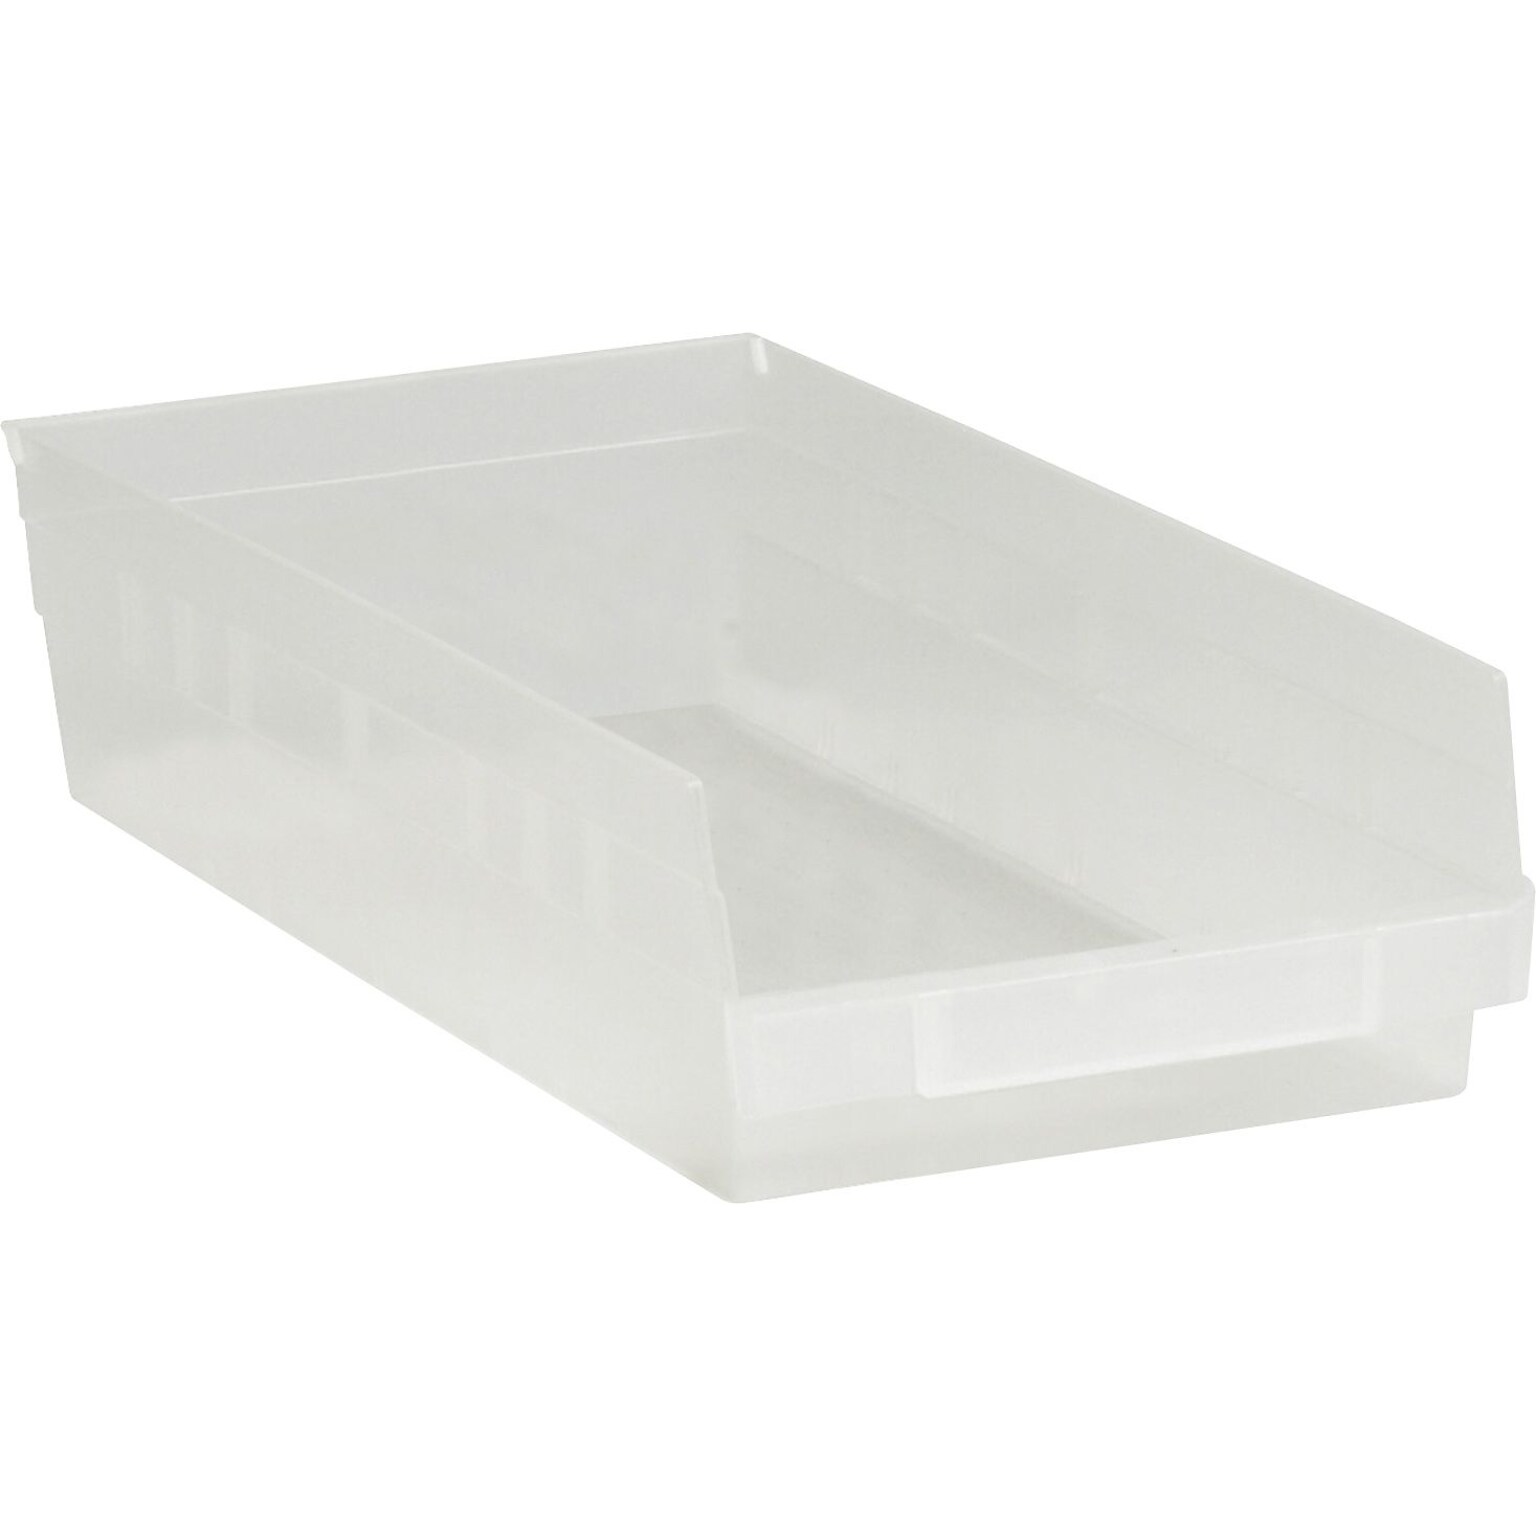 Quill Brand 17 7/8 x 8 3/8 x 4 Plastic Shelf Bin, Clear, 10/Case (BINPS113CL)